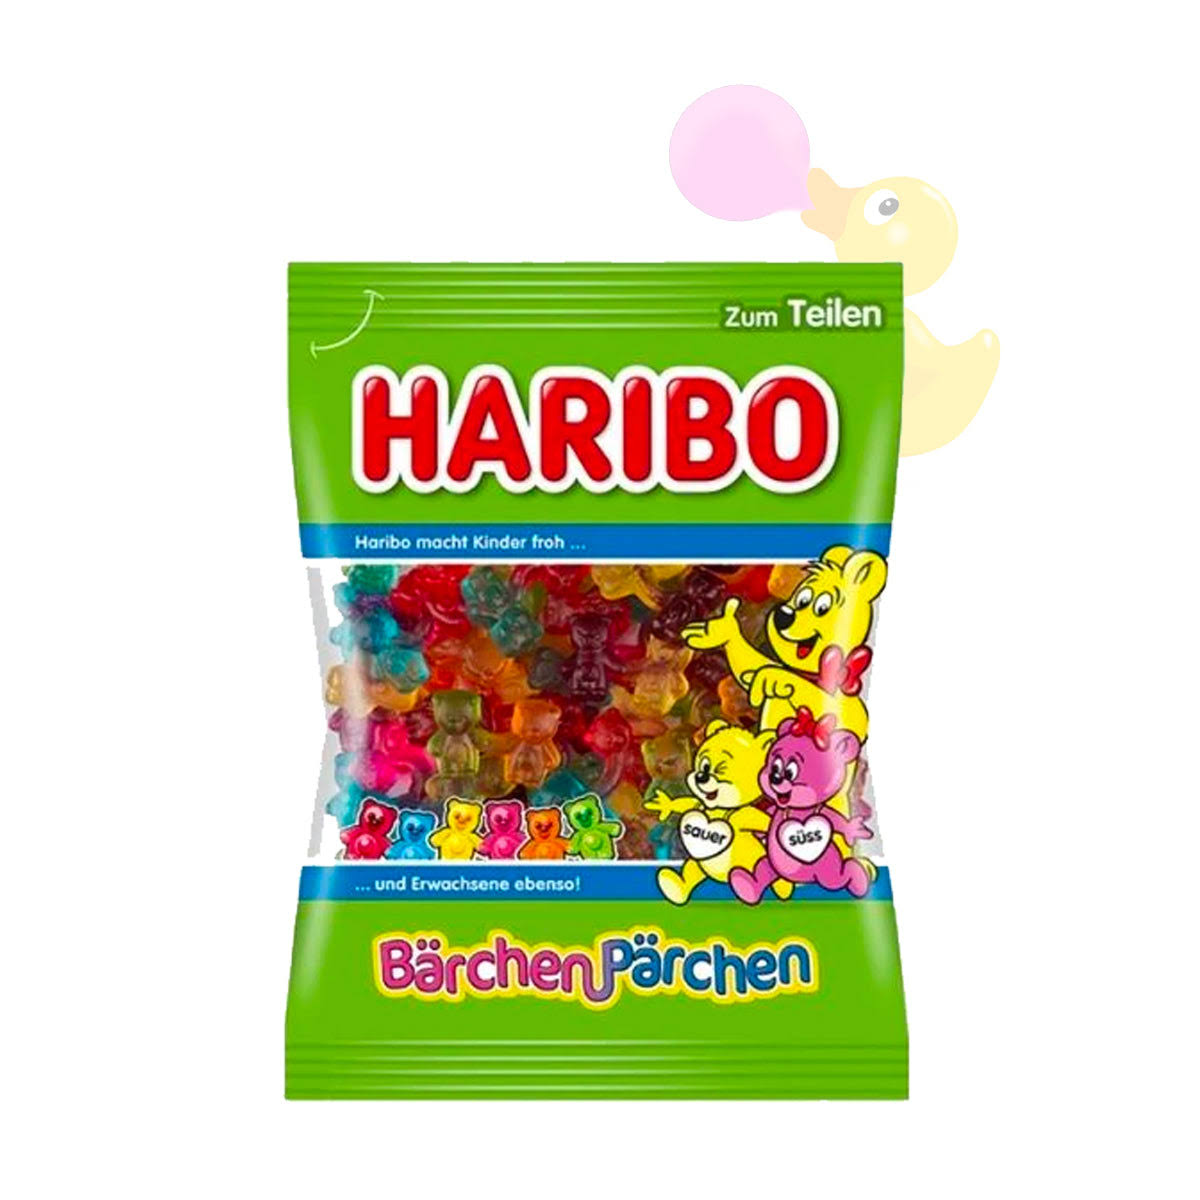 Haribo Bärchen-Pärchen Jelly with Fruit Flavors